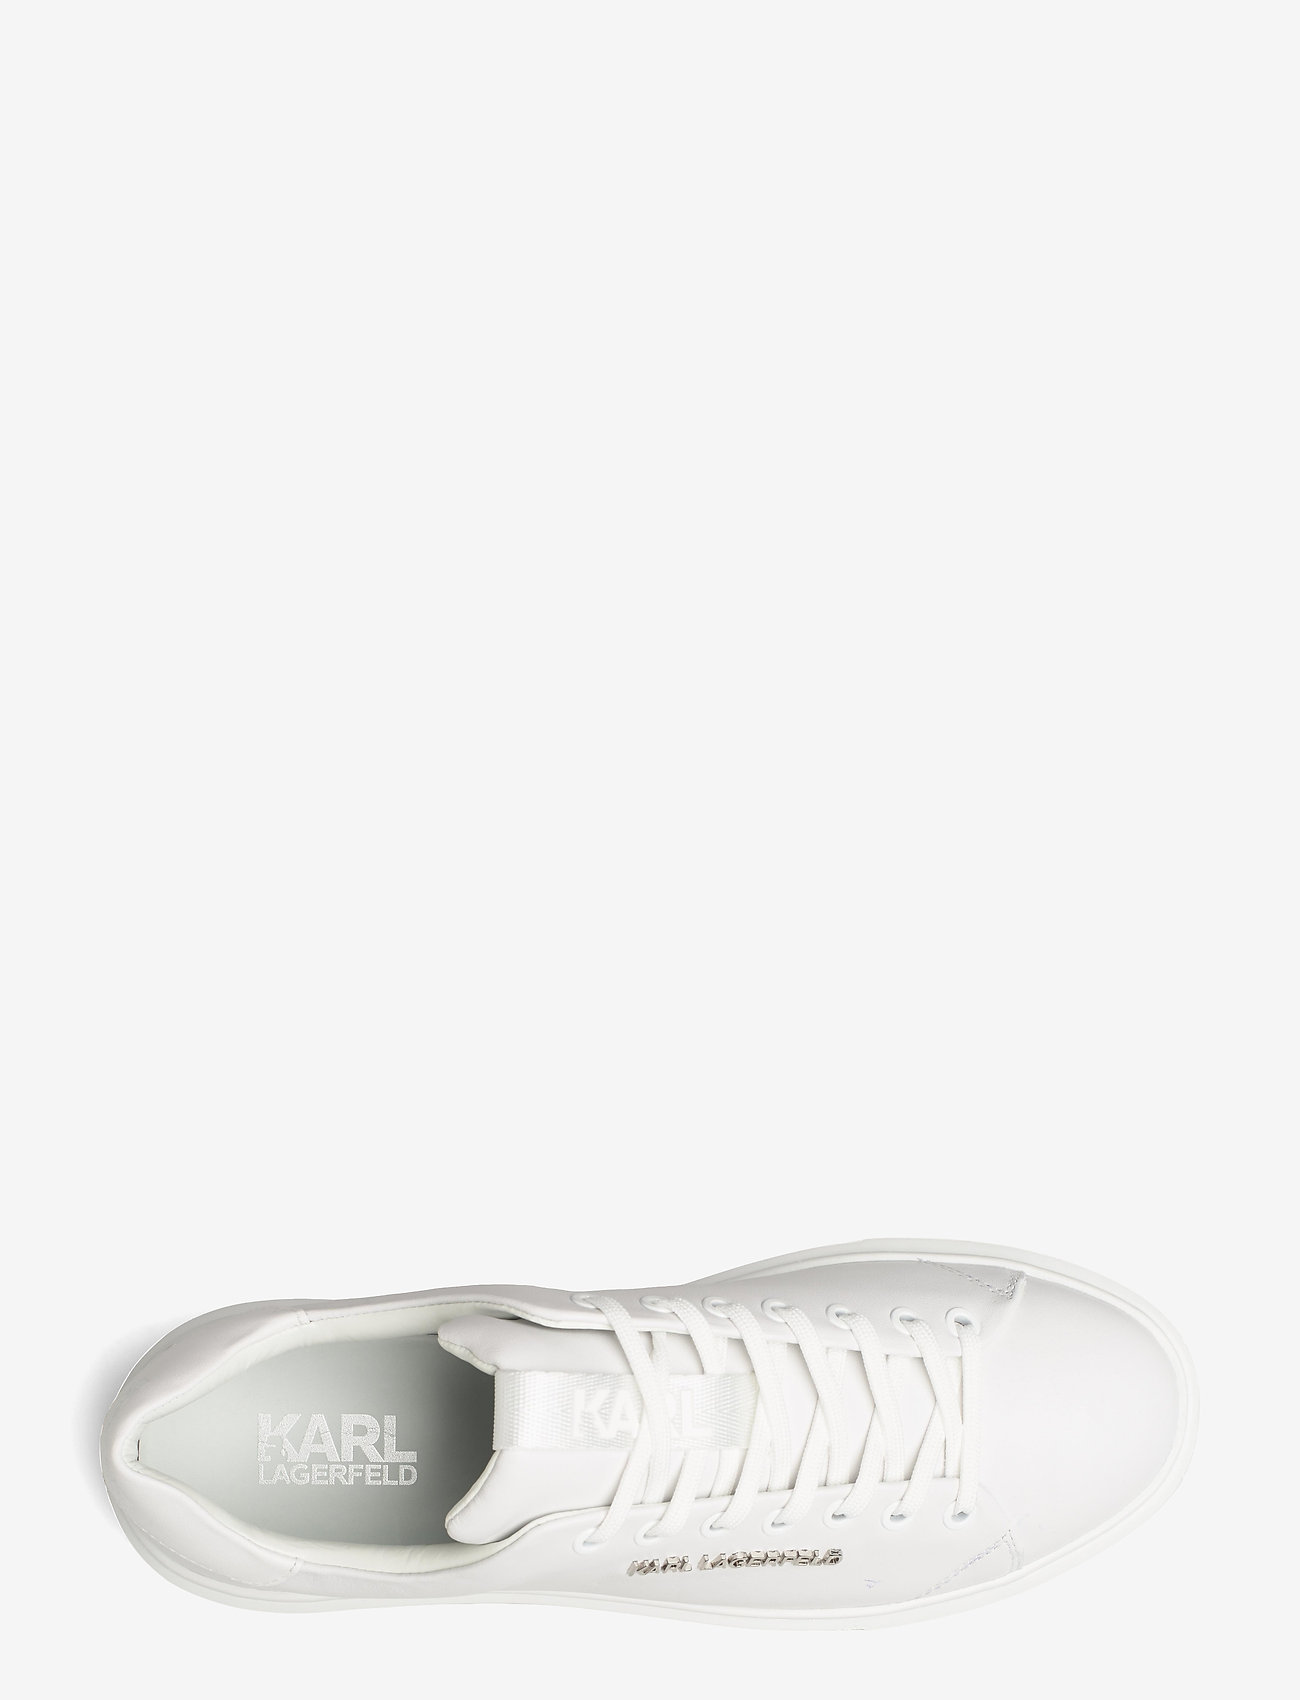 Karl Lagerfeld Shoes - MAXI KUP - lo lace ii - 3